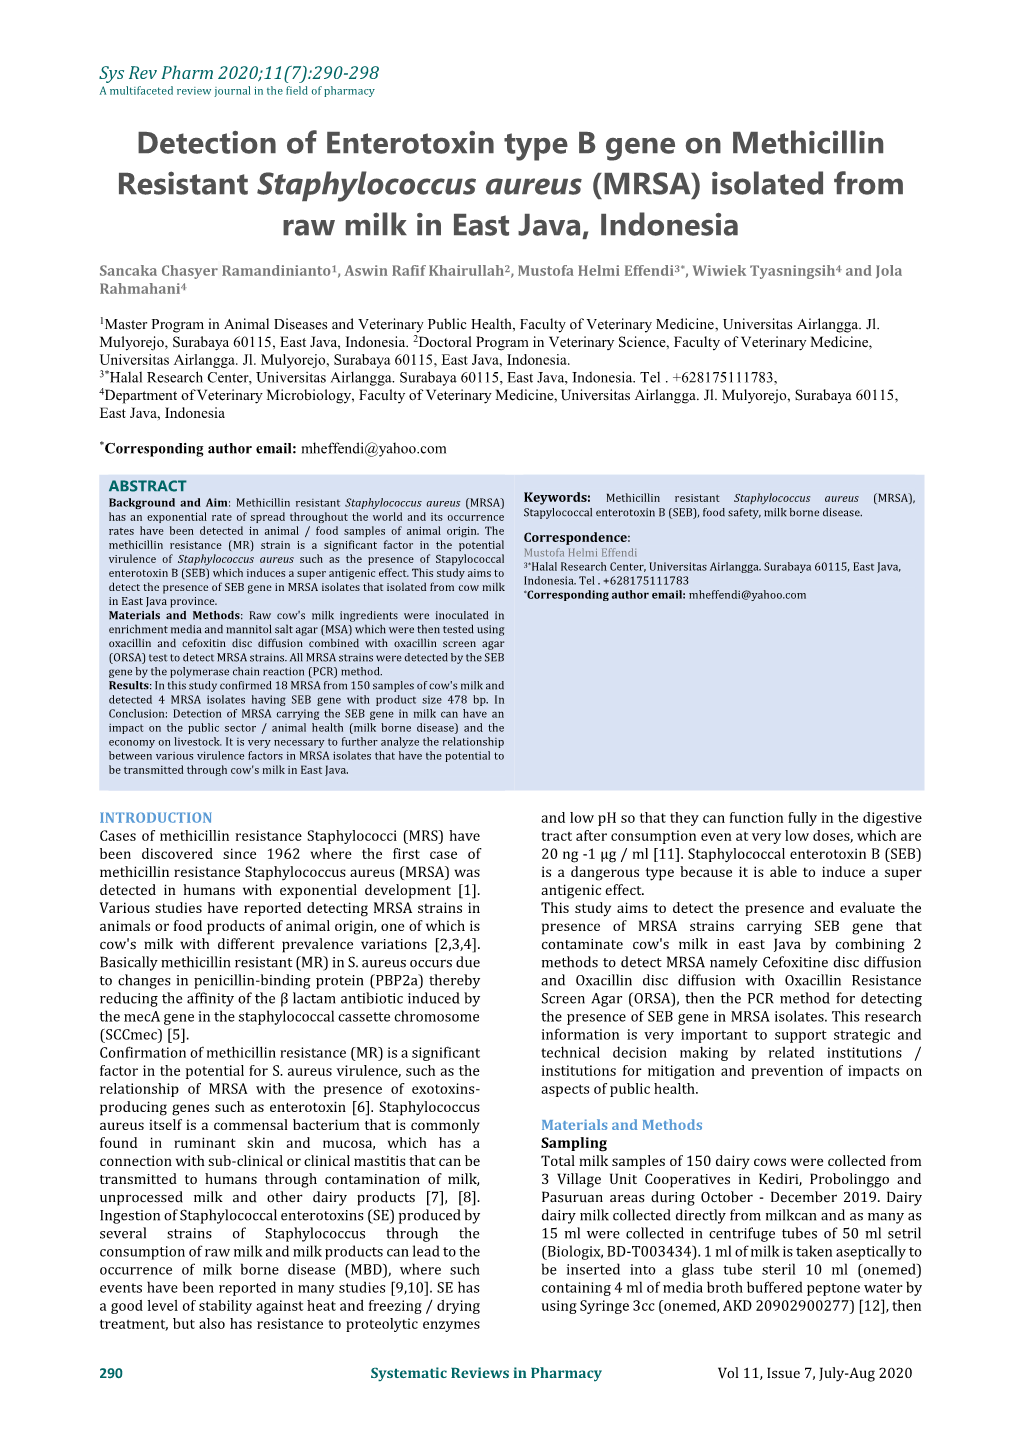 Detection of Enterotoxin Type B Gene on Methicillin Resistant Staphylococcus Aureus (MRSA) Isolated from Raw Milk in East Java, Indonesia